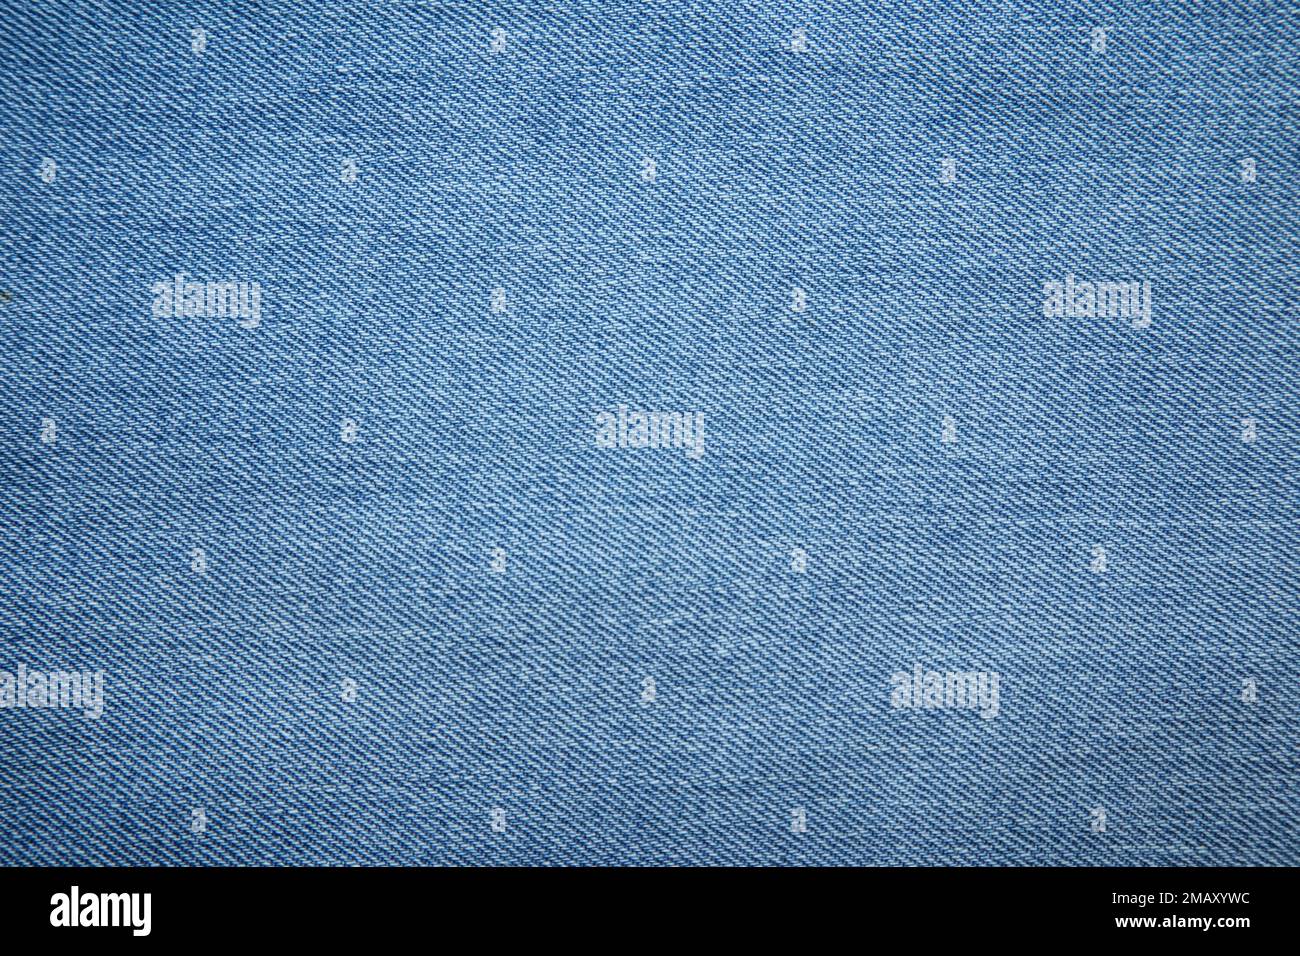 Blue jeans fabric background texture. Blue jeans fabric cloth textile ...